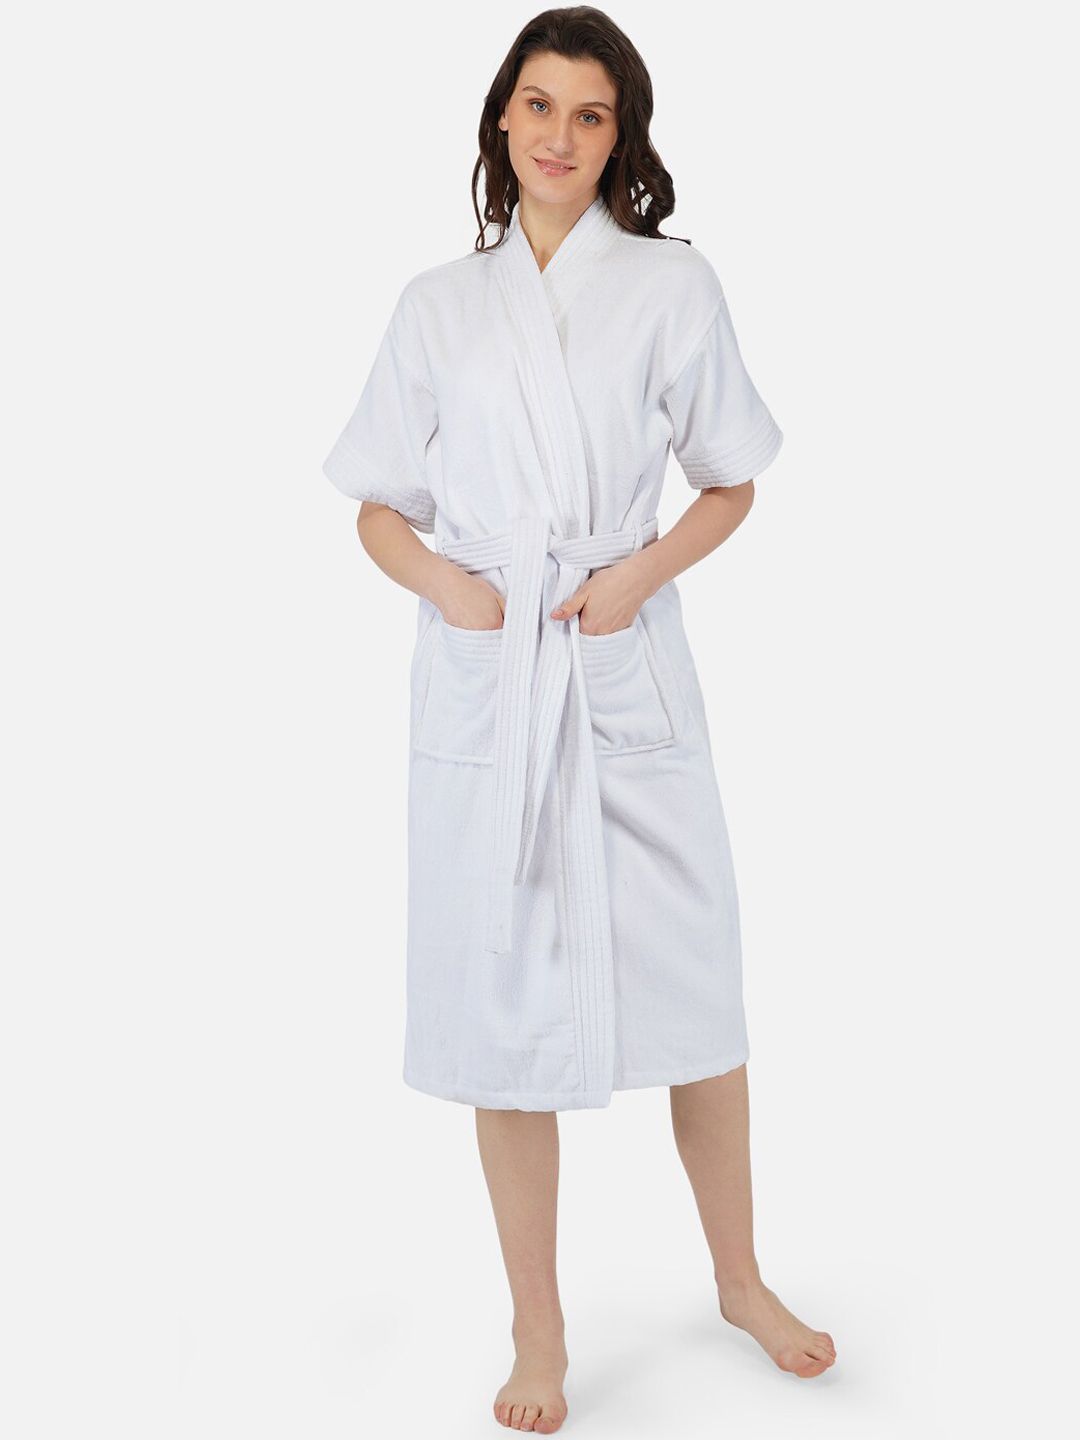 RANGOLI Unisex White Pure Cotton 400 GSM Large Bath Robe Price in India